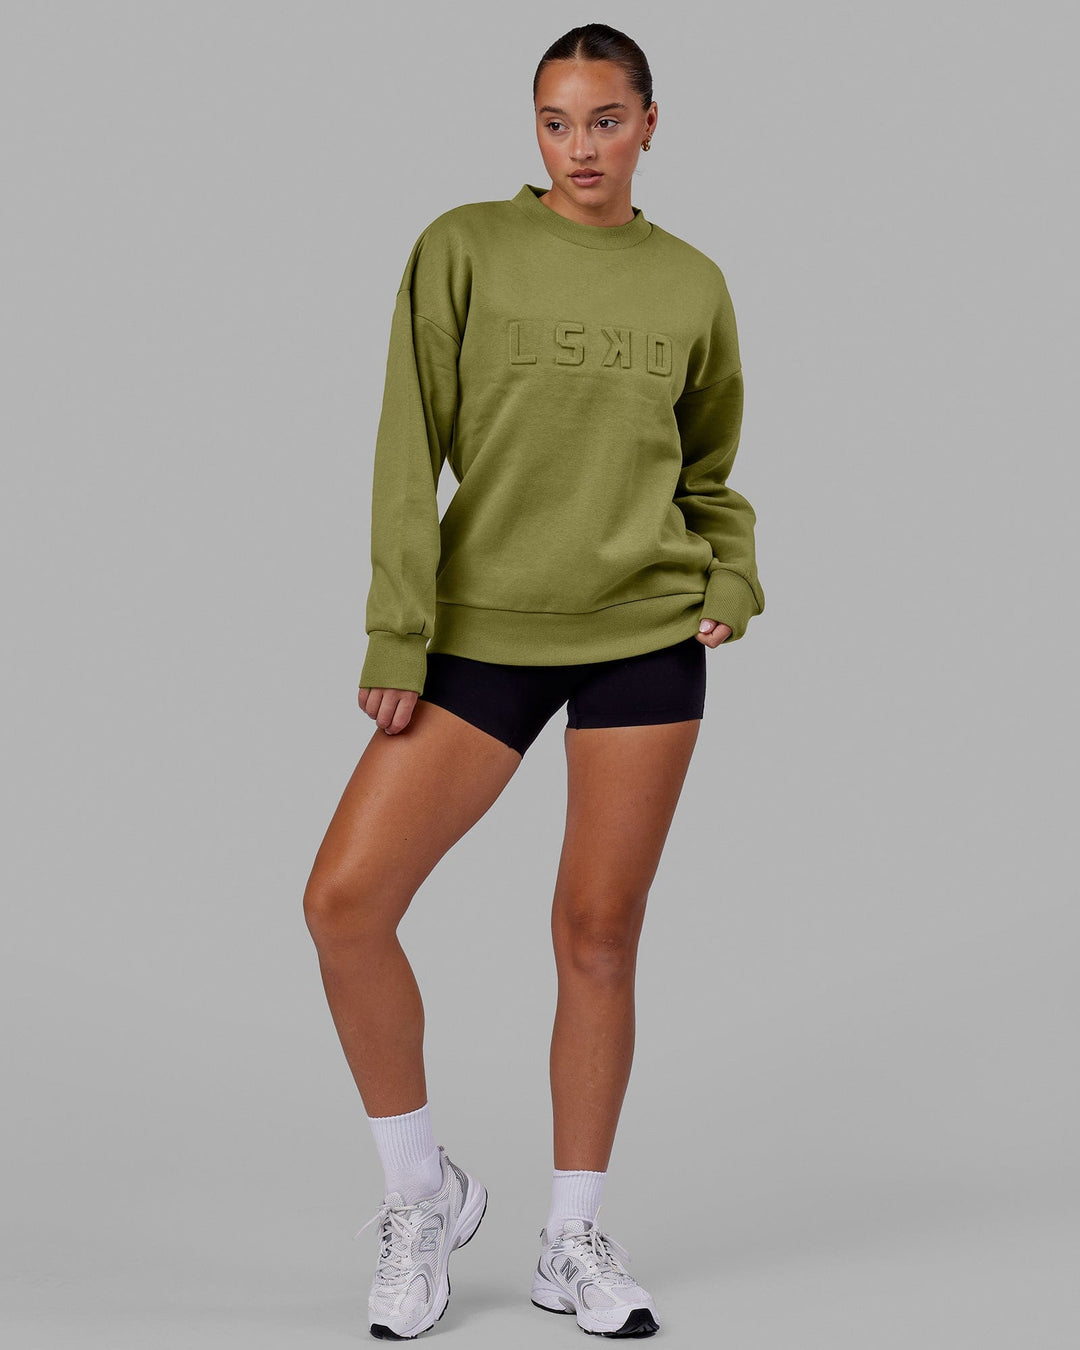 Woman wearing Unisex Stamped Sweater Oversize - Moss Stone